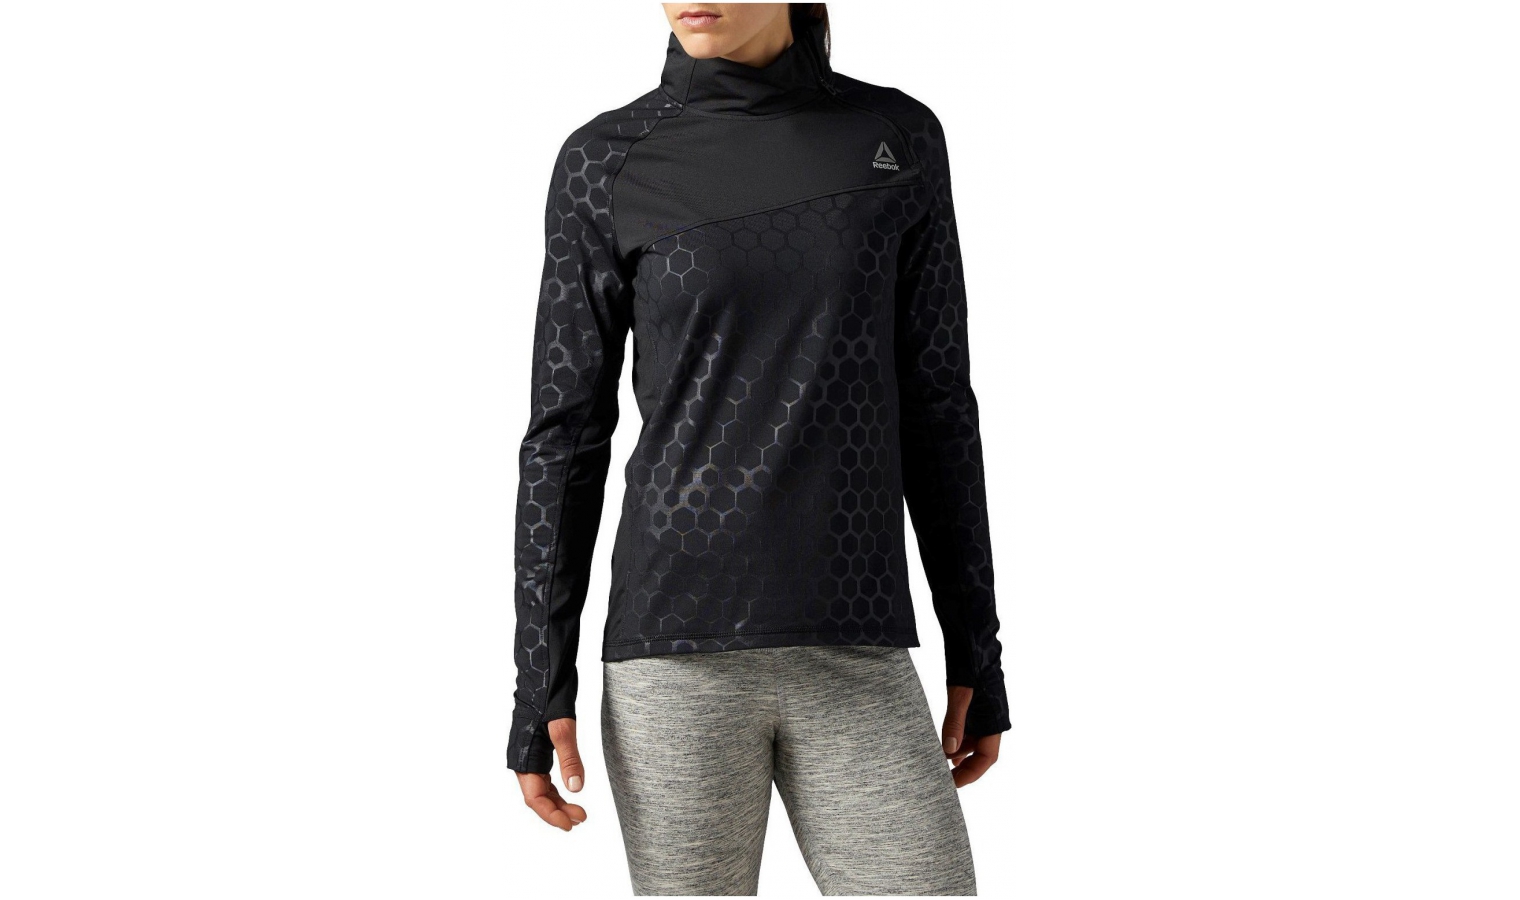 Womens sweatshirt Reebok HEXAWARM QTR ZIP W black | AD Sport.store